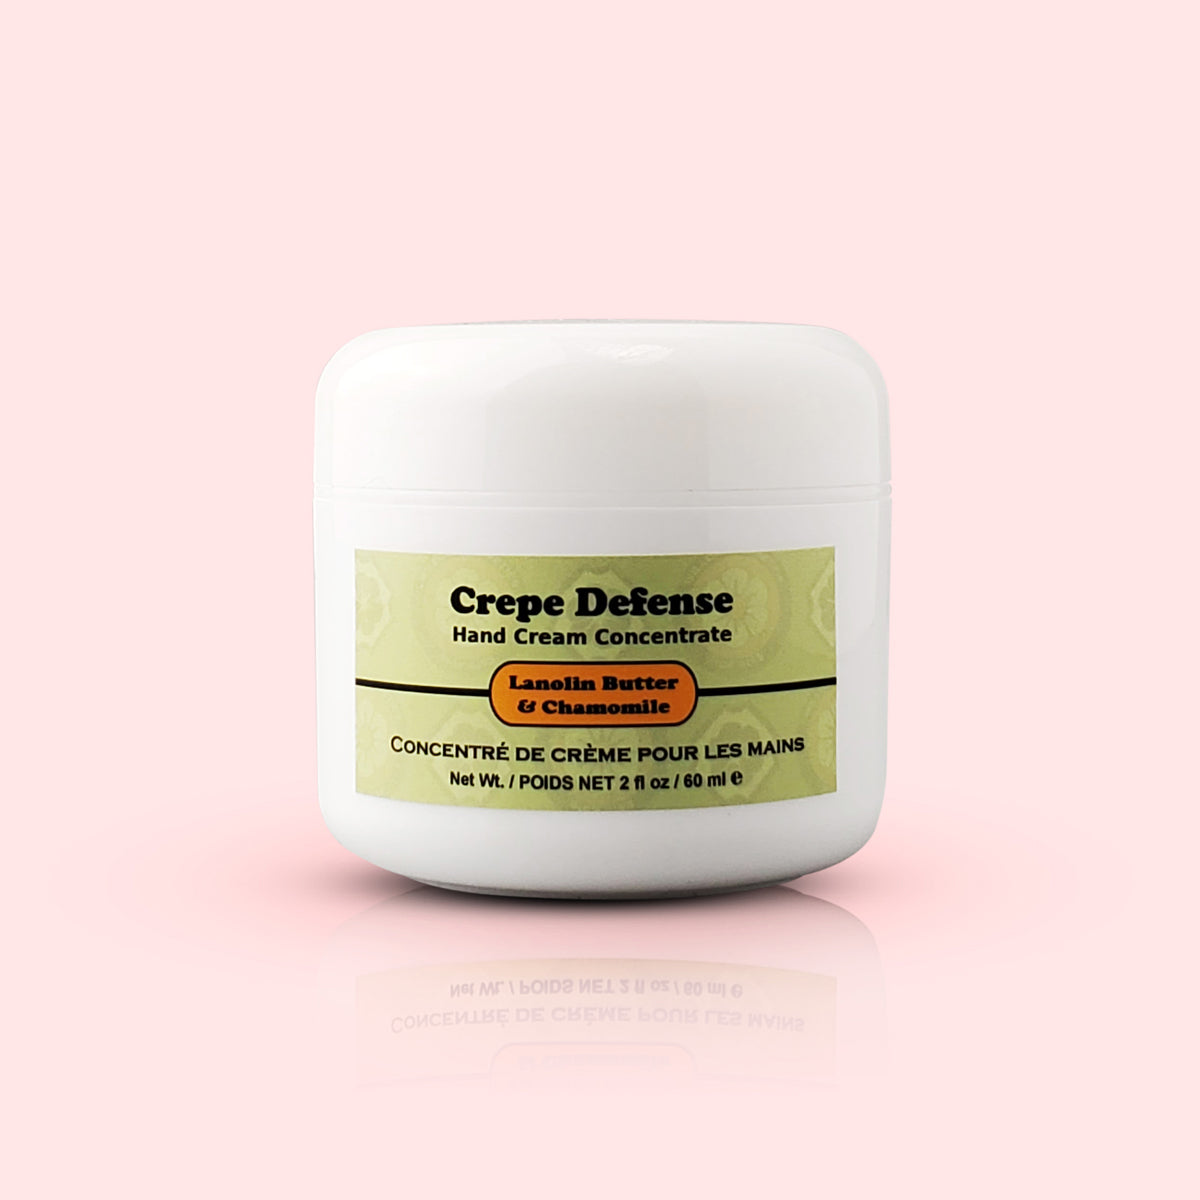 Crèpe Defense Hand Cream